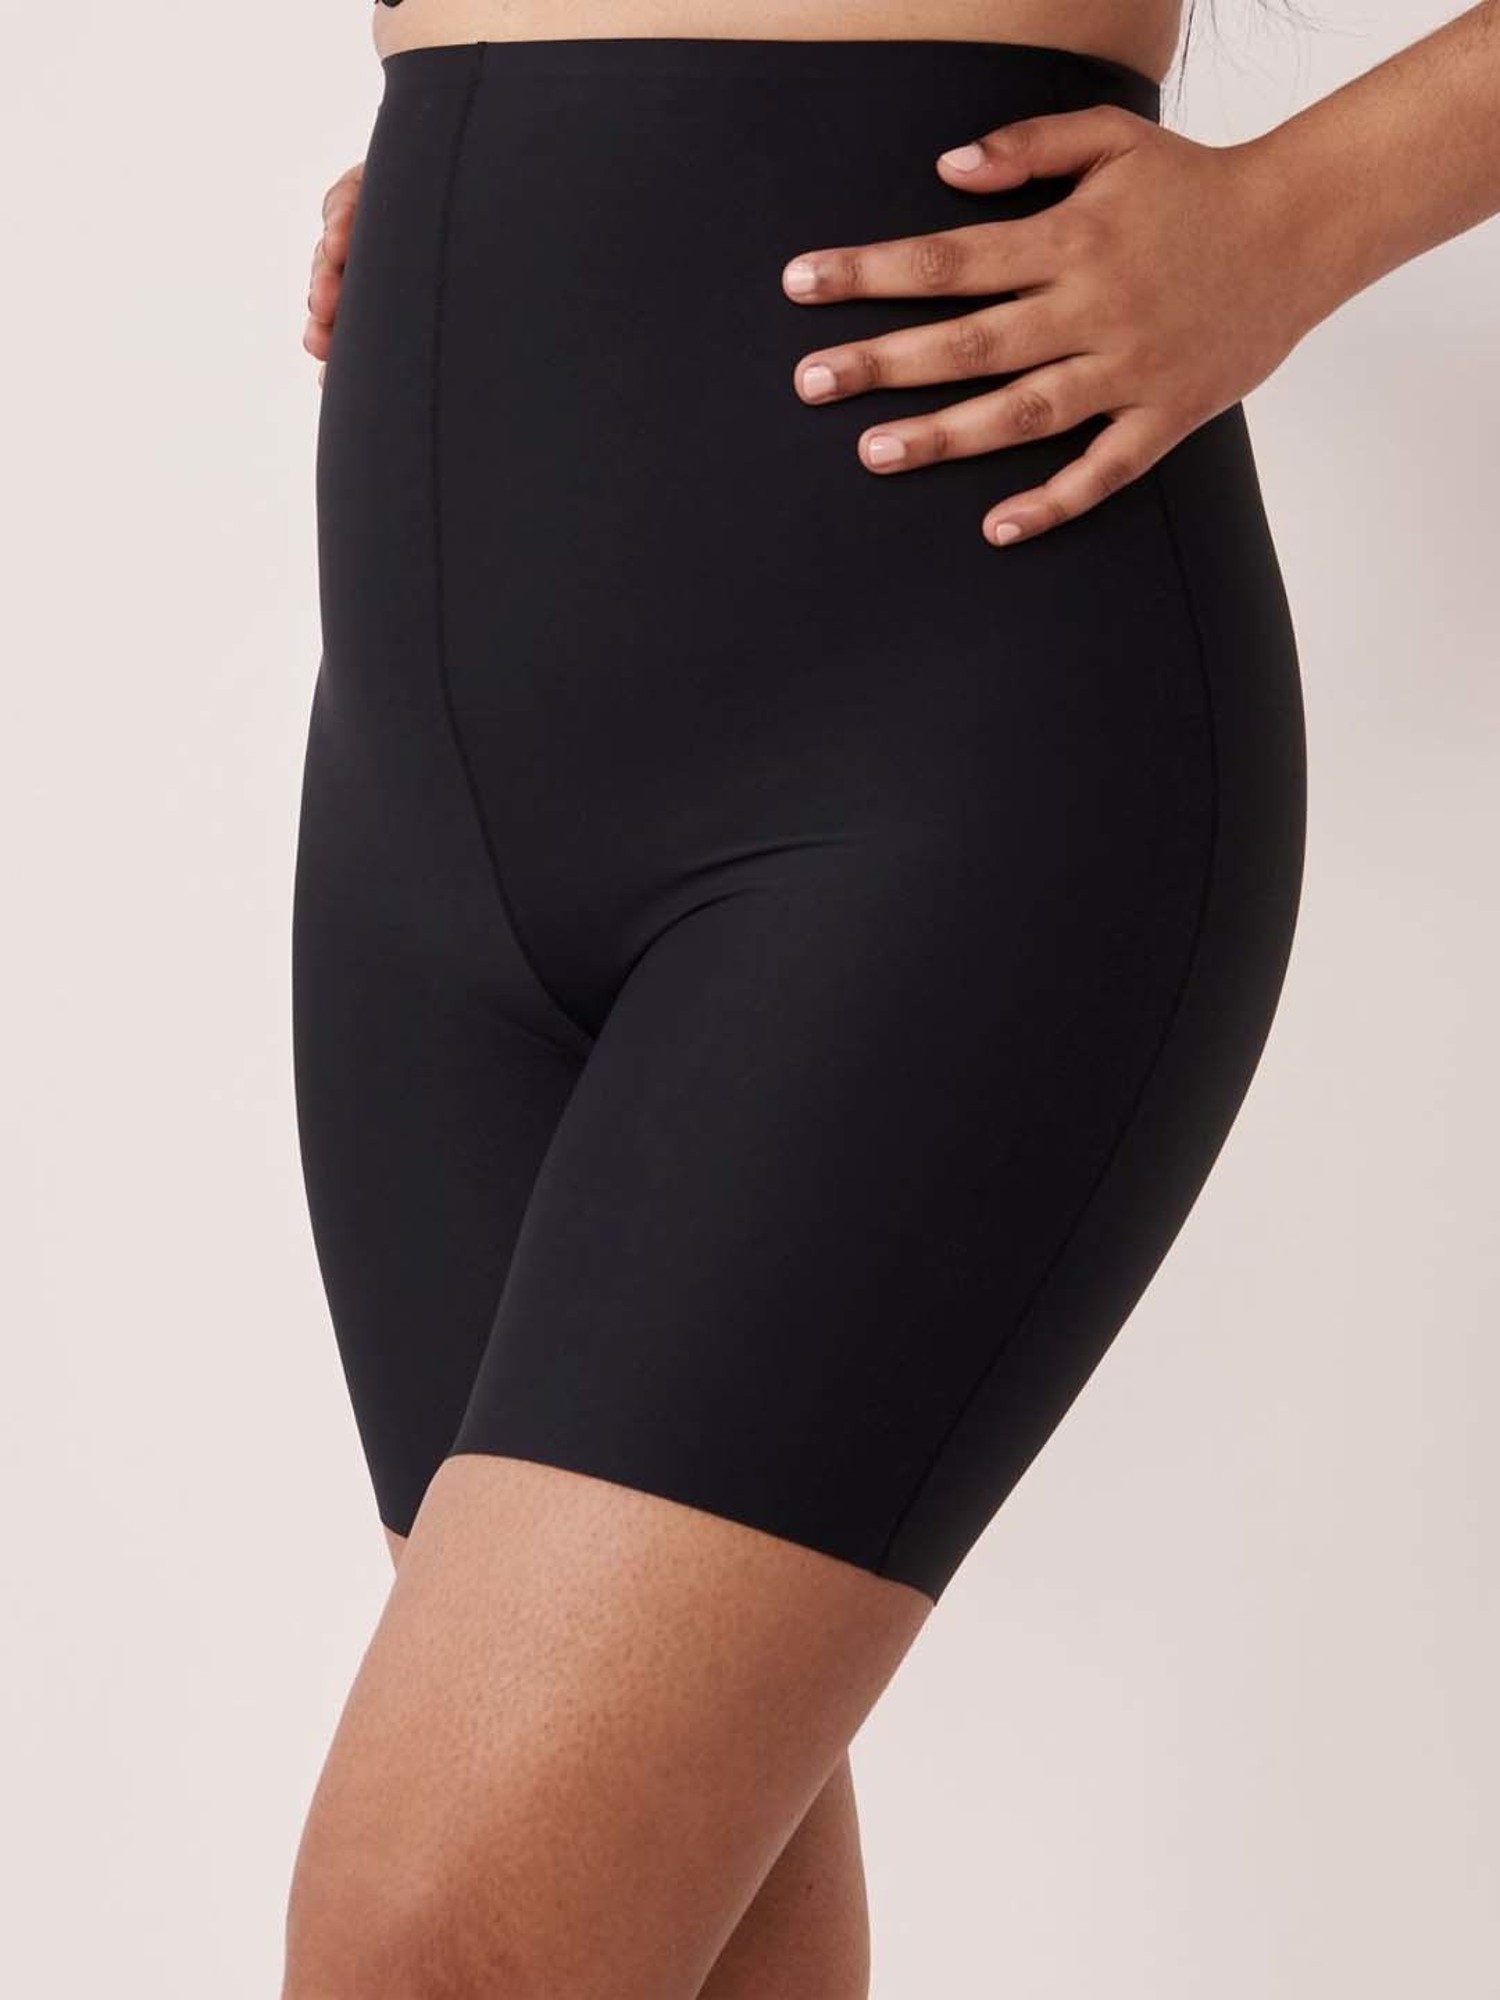 Buy Secrets By ZeroKaata Women Solid High-waist Seamless Tummy